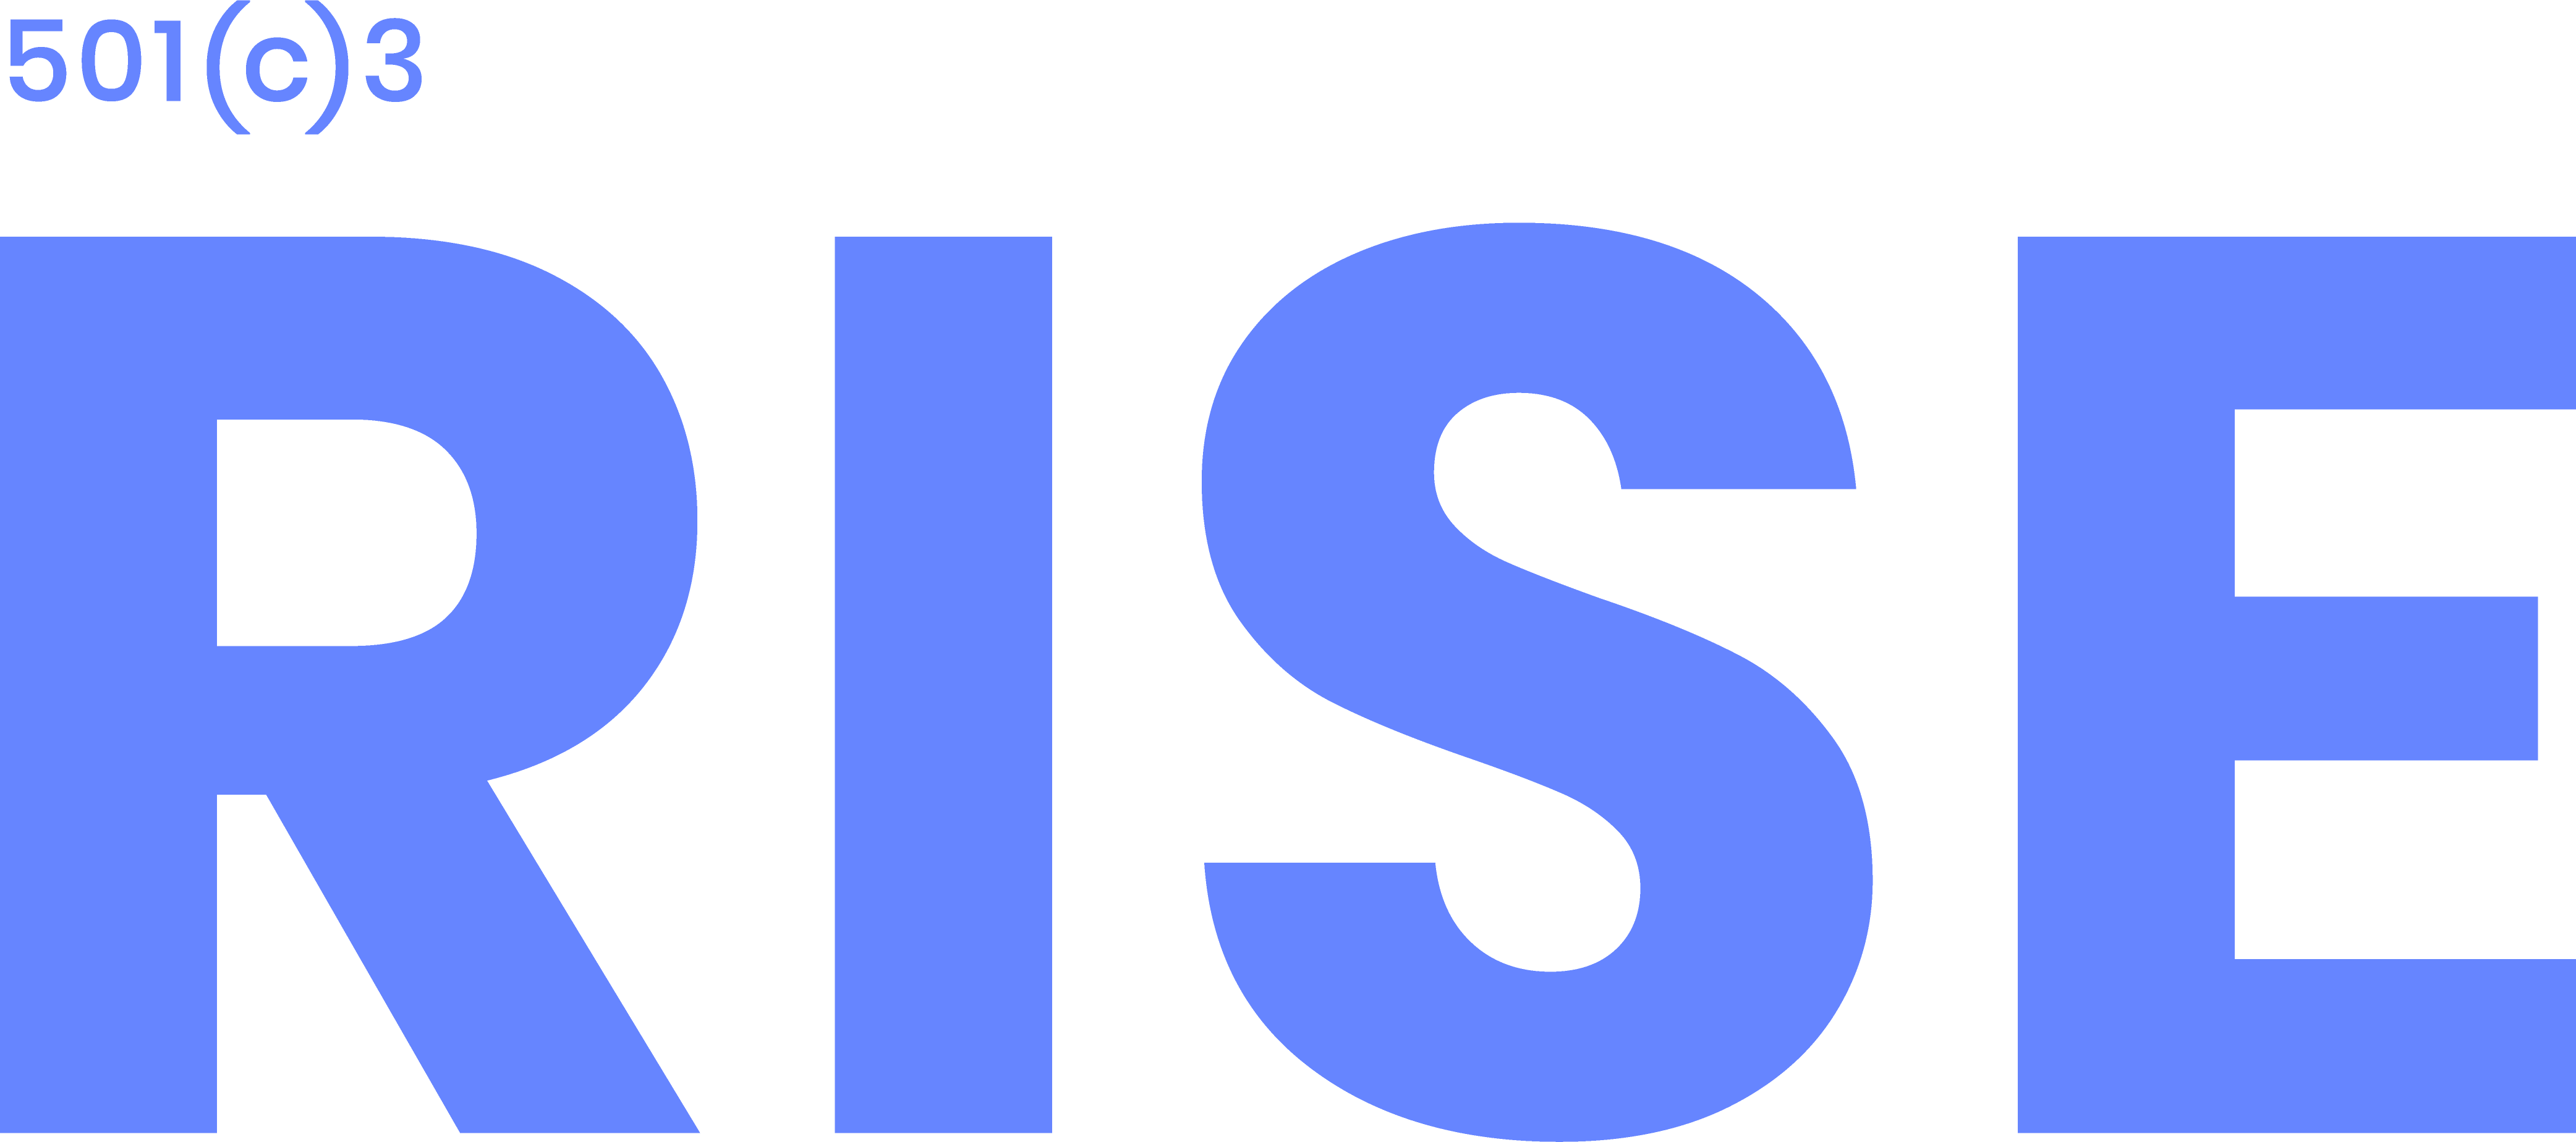 RISE Logo_Blurple-1